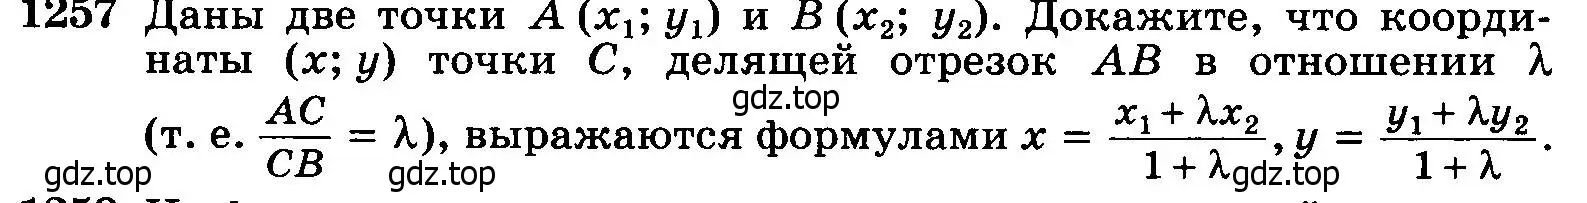 Условие номер 1257 (страница 330) гдз по геометрии 7-9 класс Атанасян, Бутузов, учебник